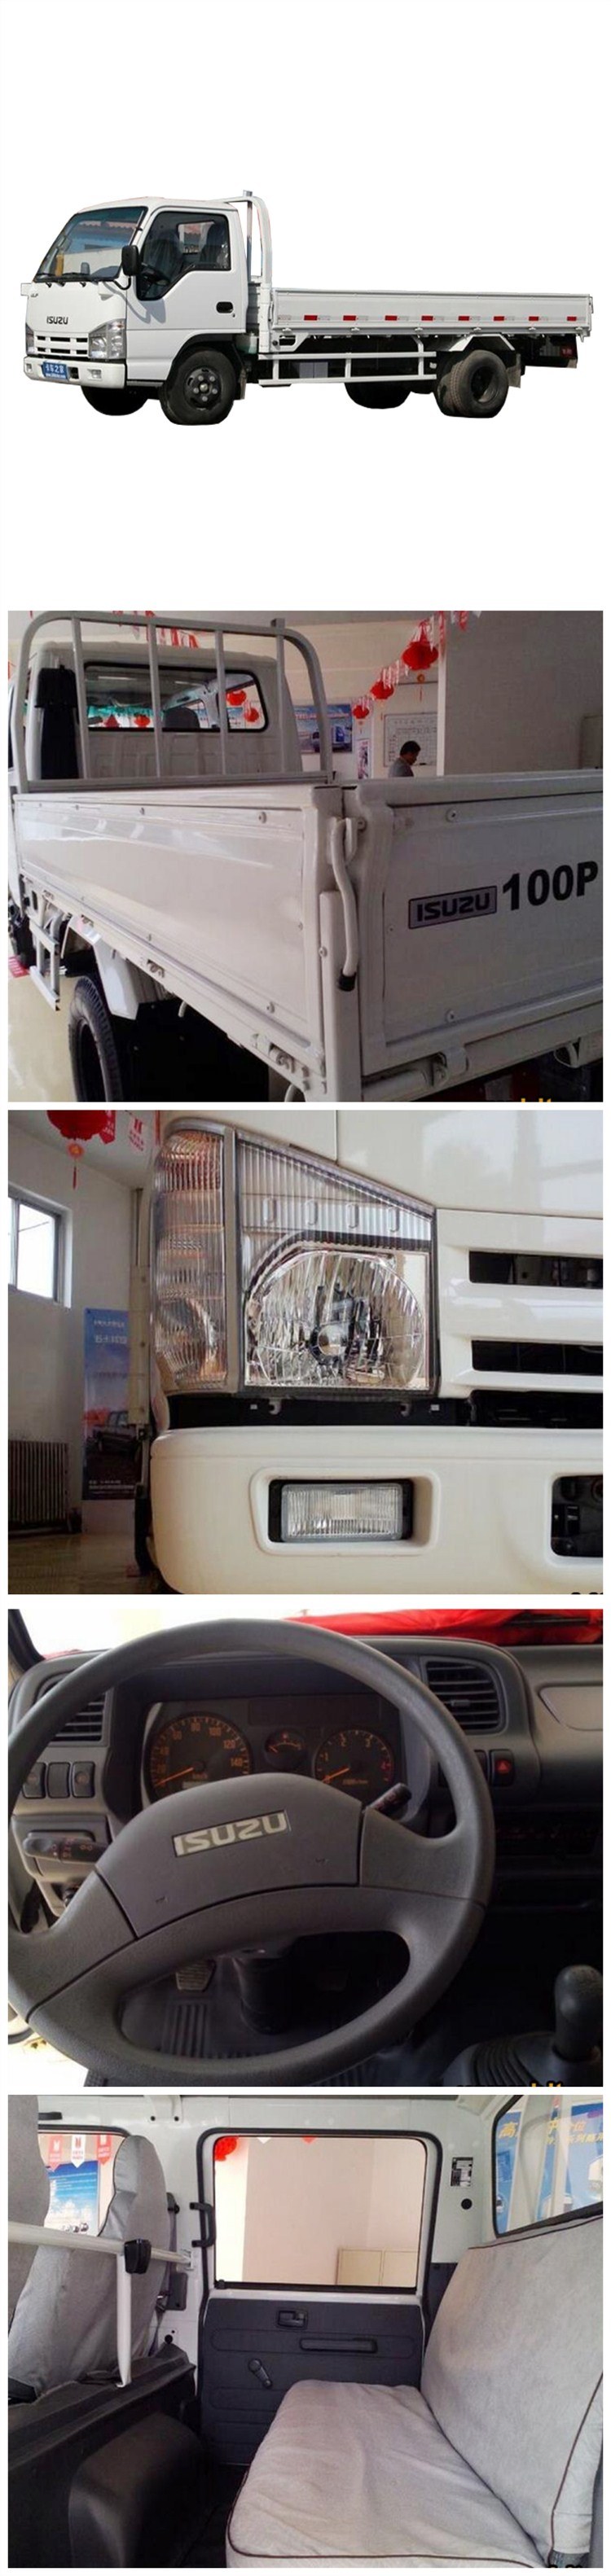 Isuzu 100p 1.8t - 5t Small Flatbed Truck, Cargo Flatbed Truck